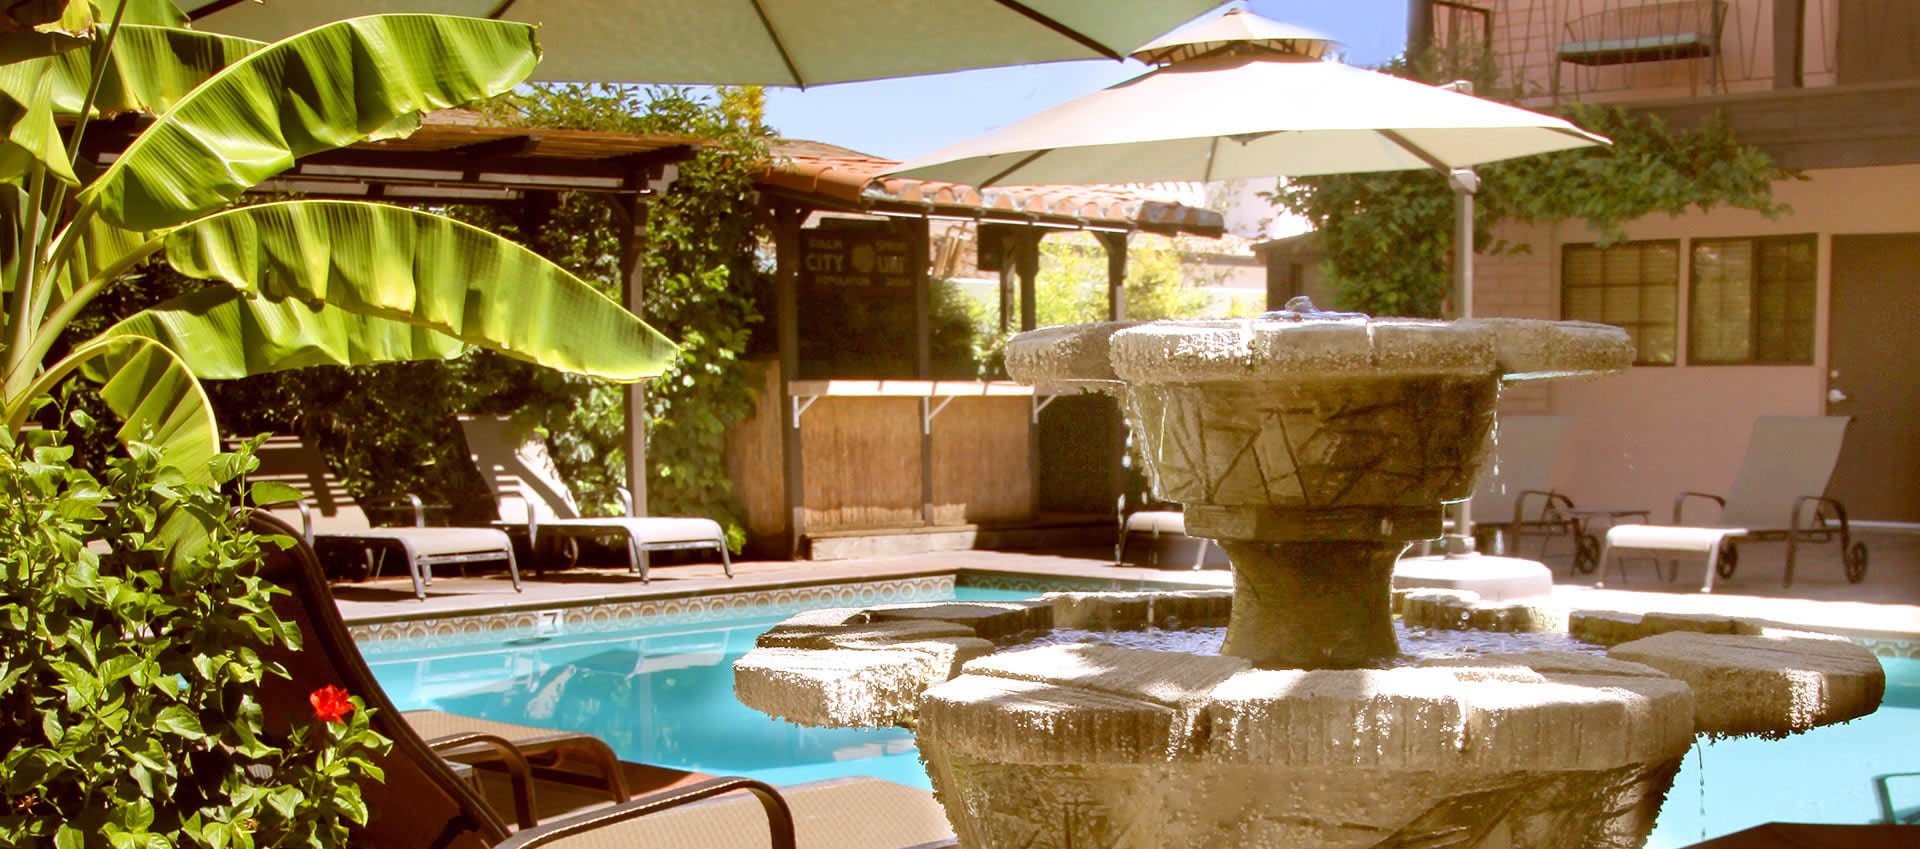 Hotel California patio fountain and pool